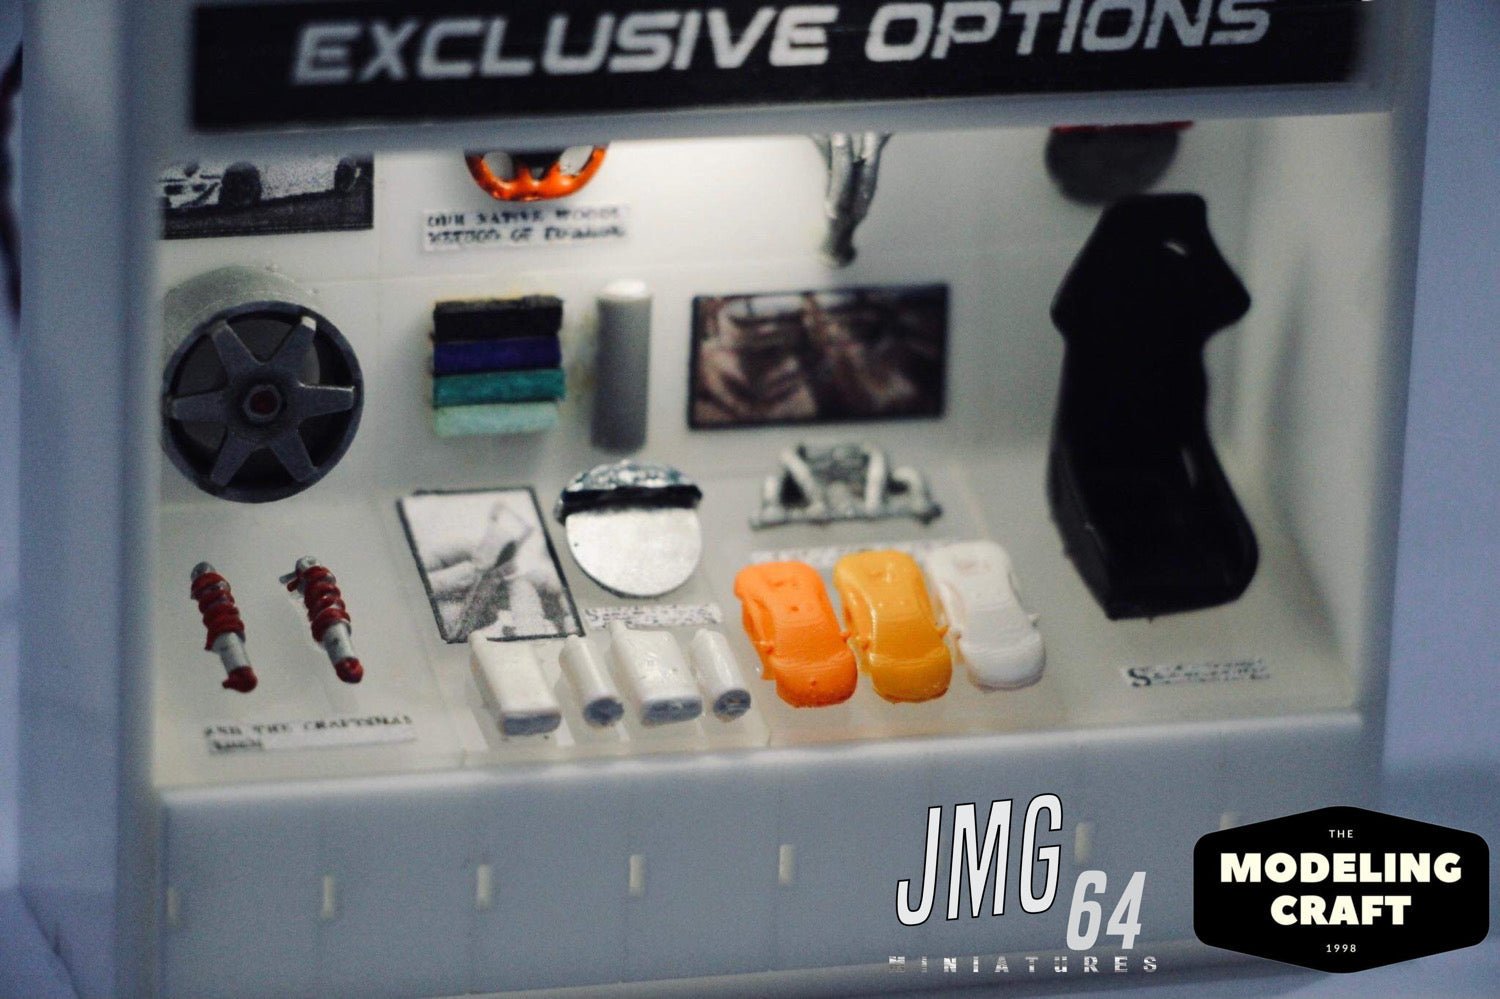 JMG X MODELING CRAFT - 1:64 Exclusive Options (B-BLACK) - MODEL CAR UKDecoration#INNO64##TARMAC##diecast_model#